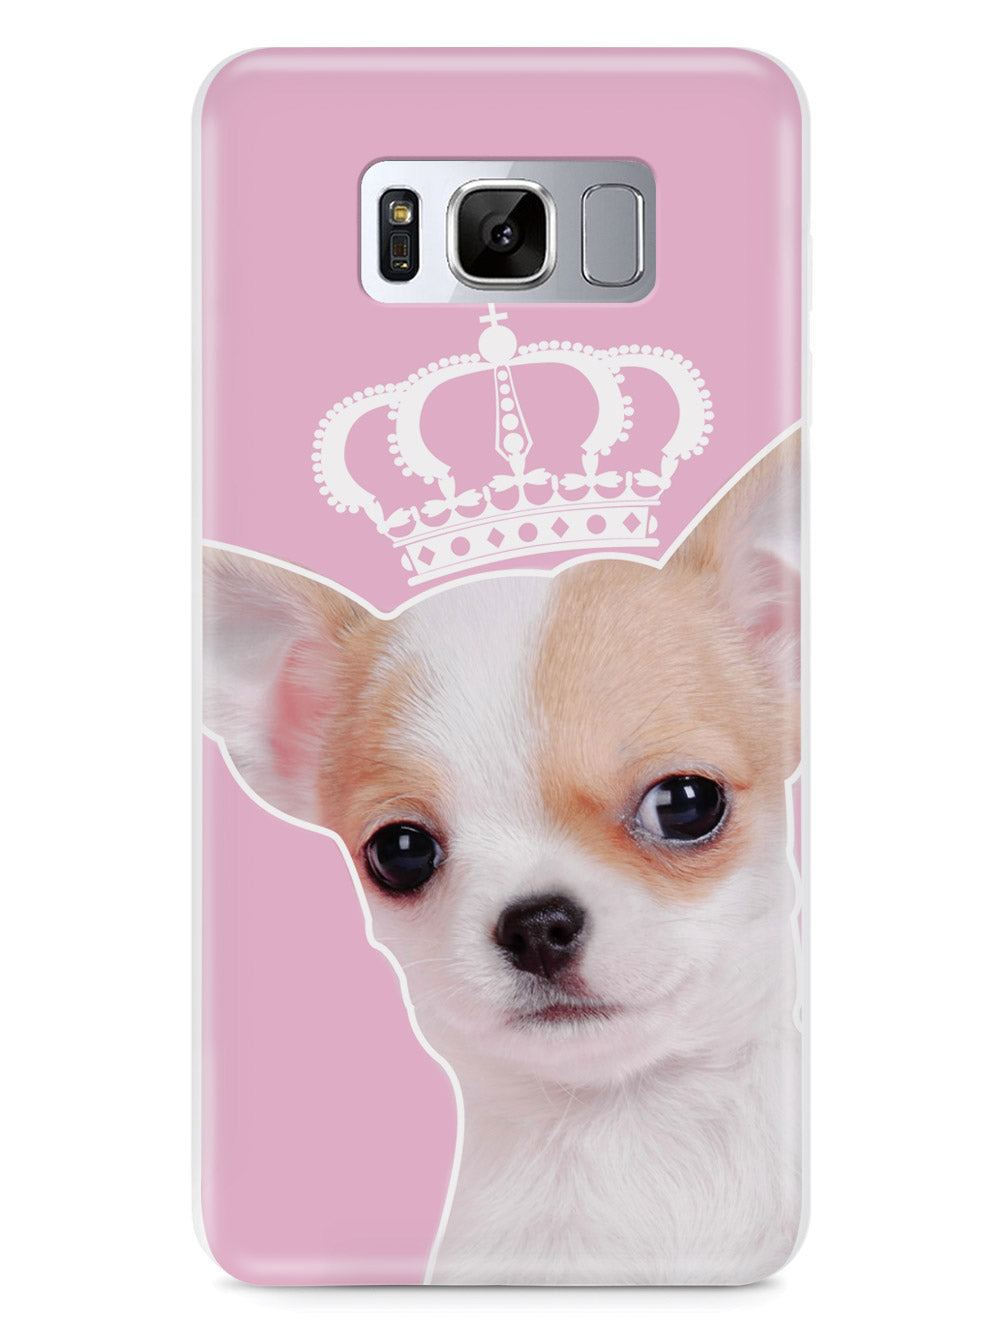 Princess Chihuahua Dog Case